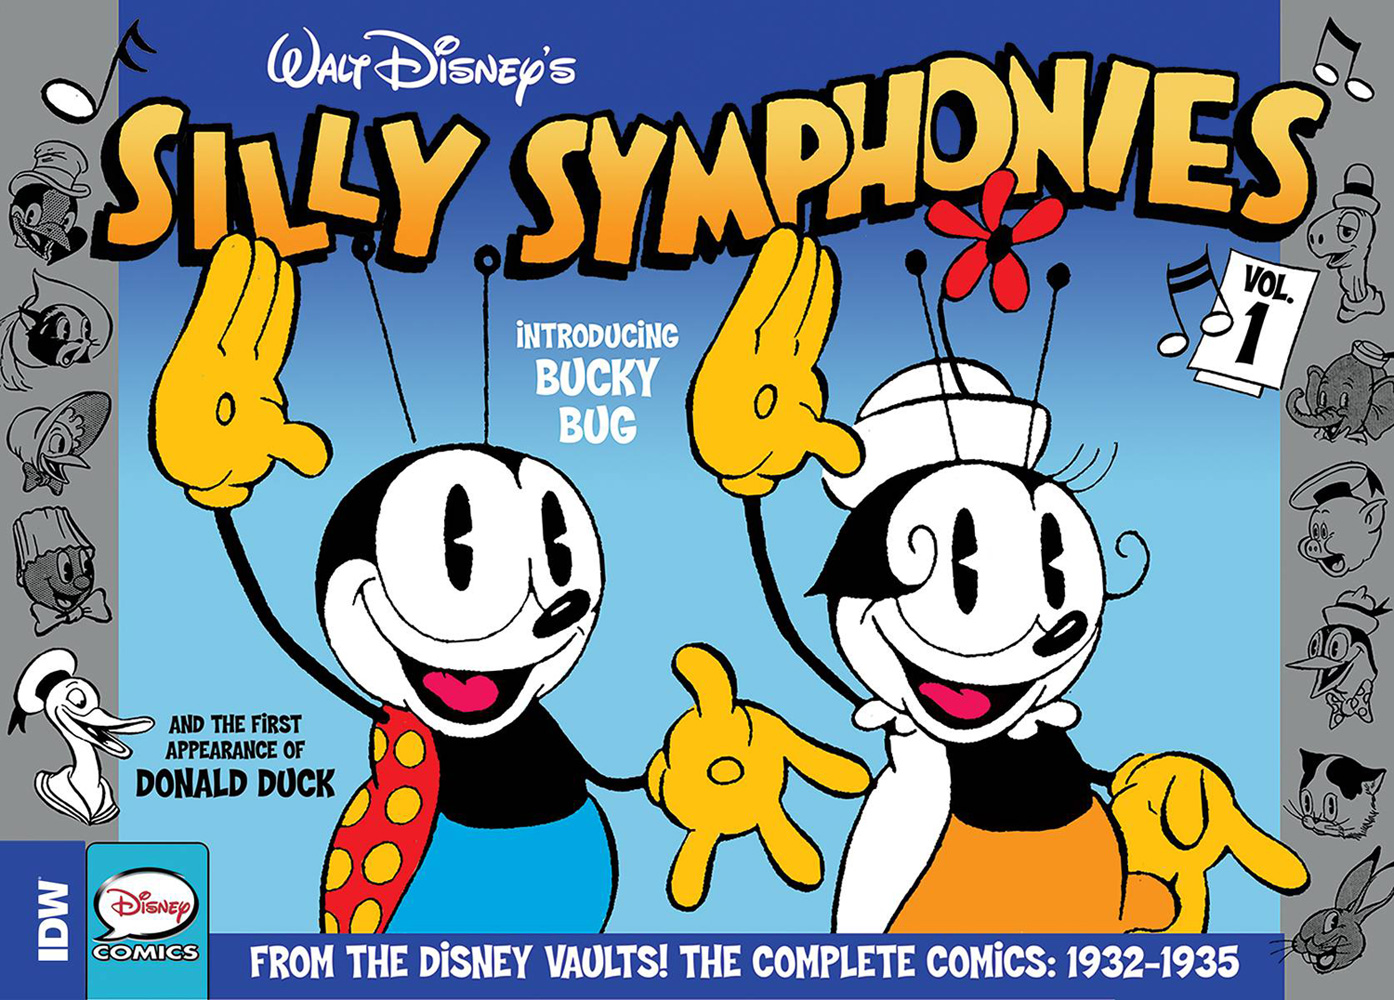 Walt Disney’s Silly Symphonies Vol. 1